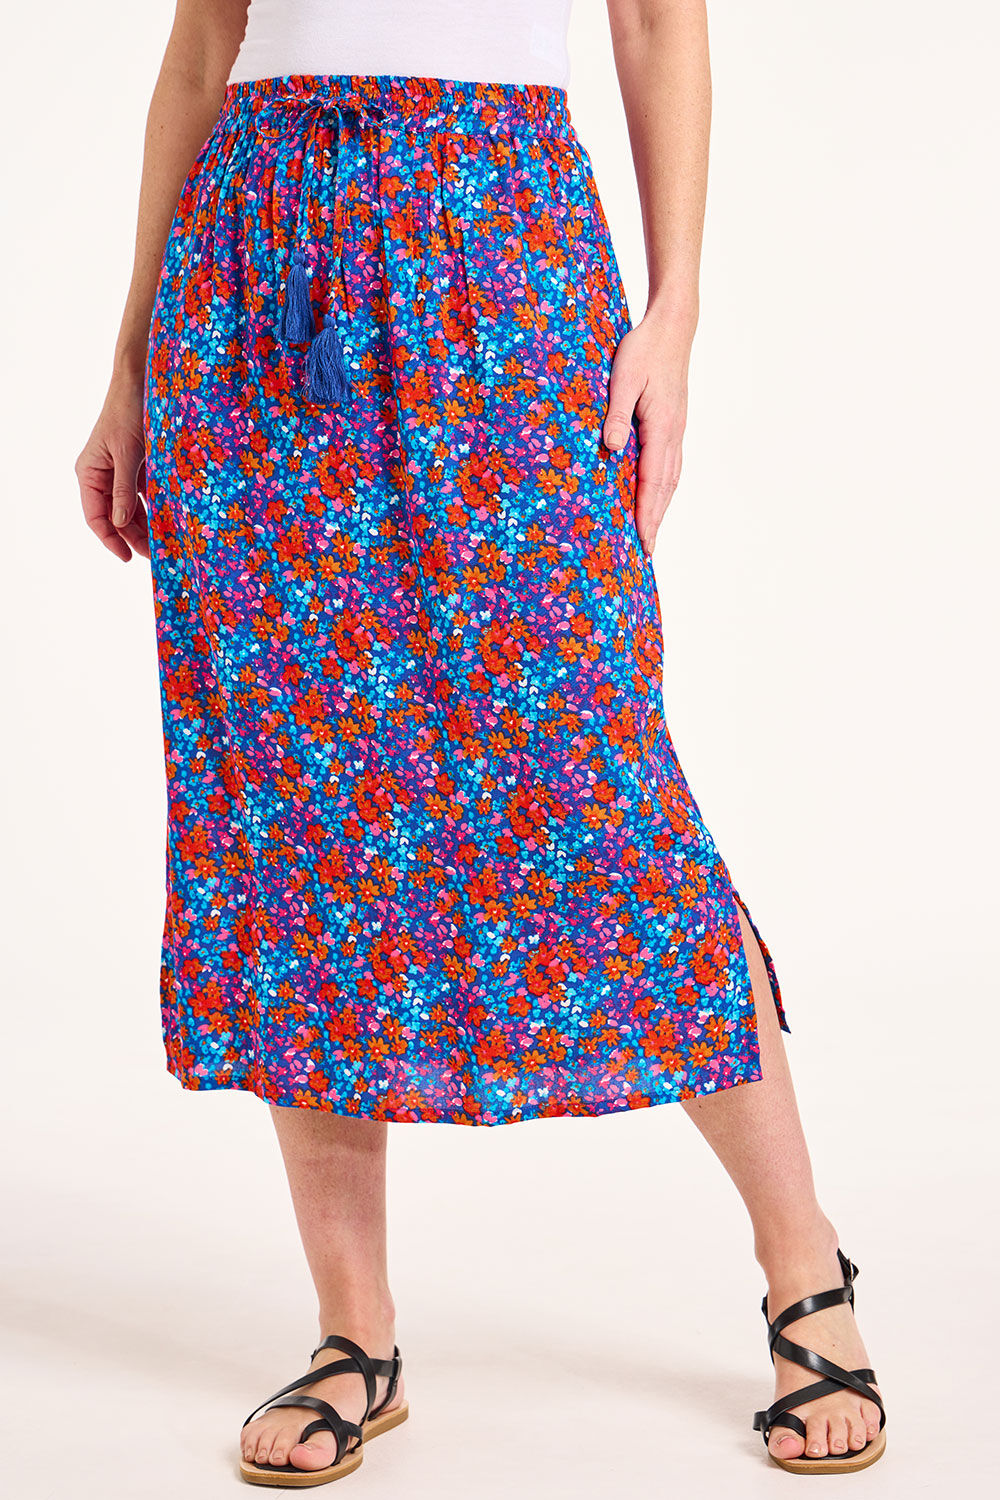 Bonmarche Blue Ditsy Print Tie Waist Midi Skirt, Size: 10